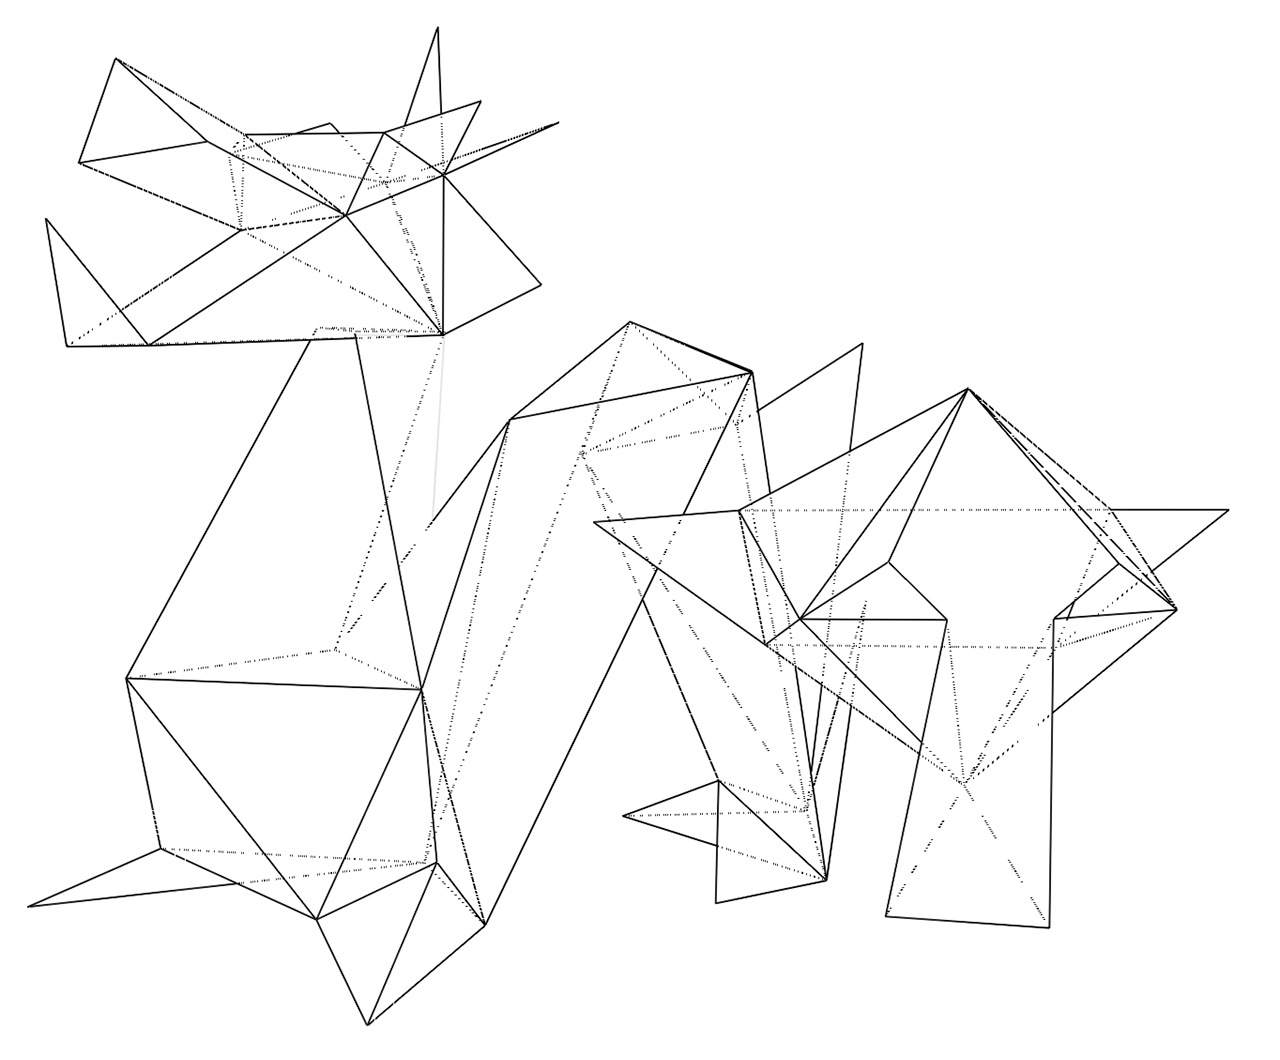 Geometry: 63 vertices, 130 edges, 66 faces